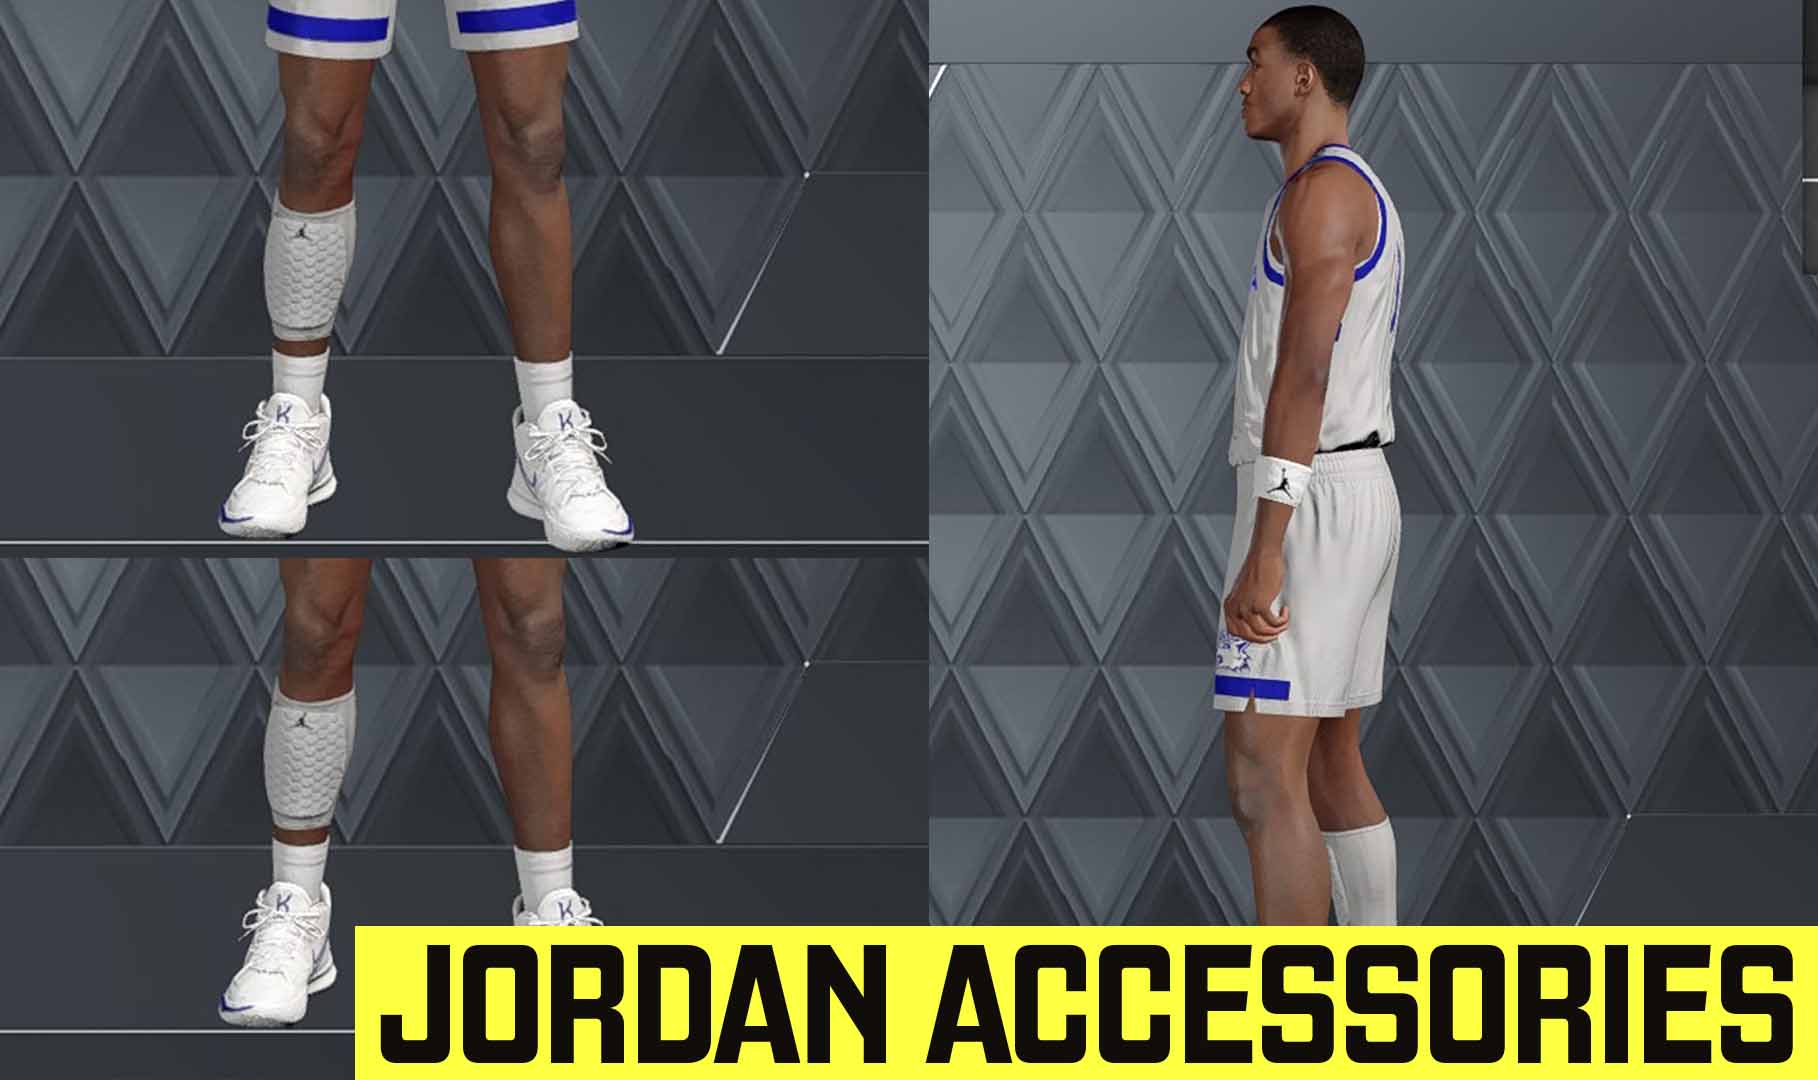 Jordan, Accessories